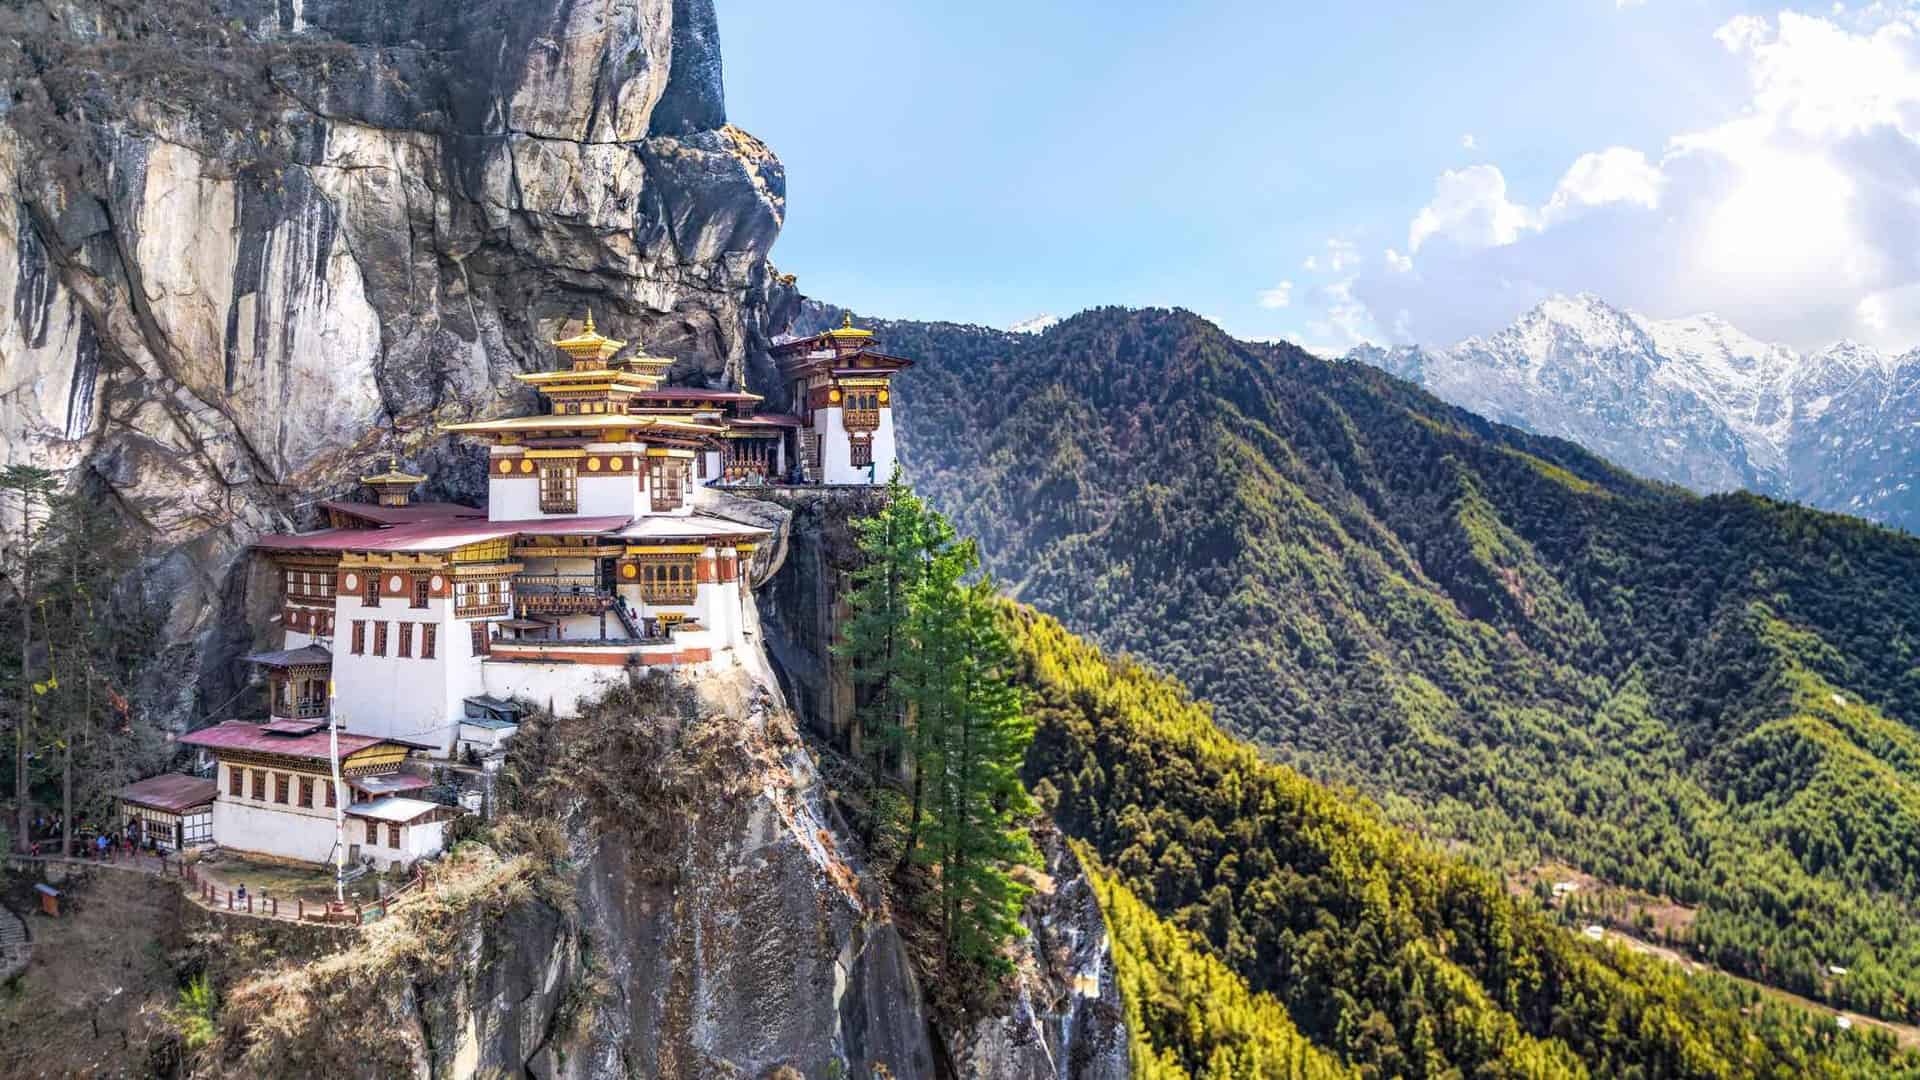 Tiger's Nest I Bhutan